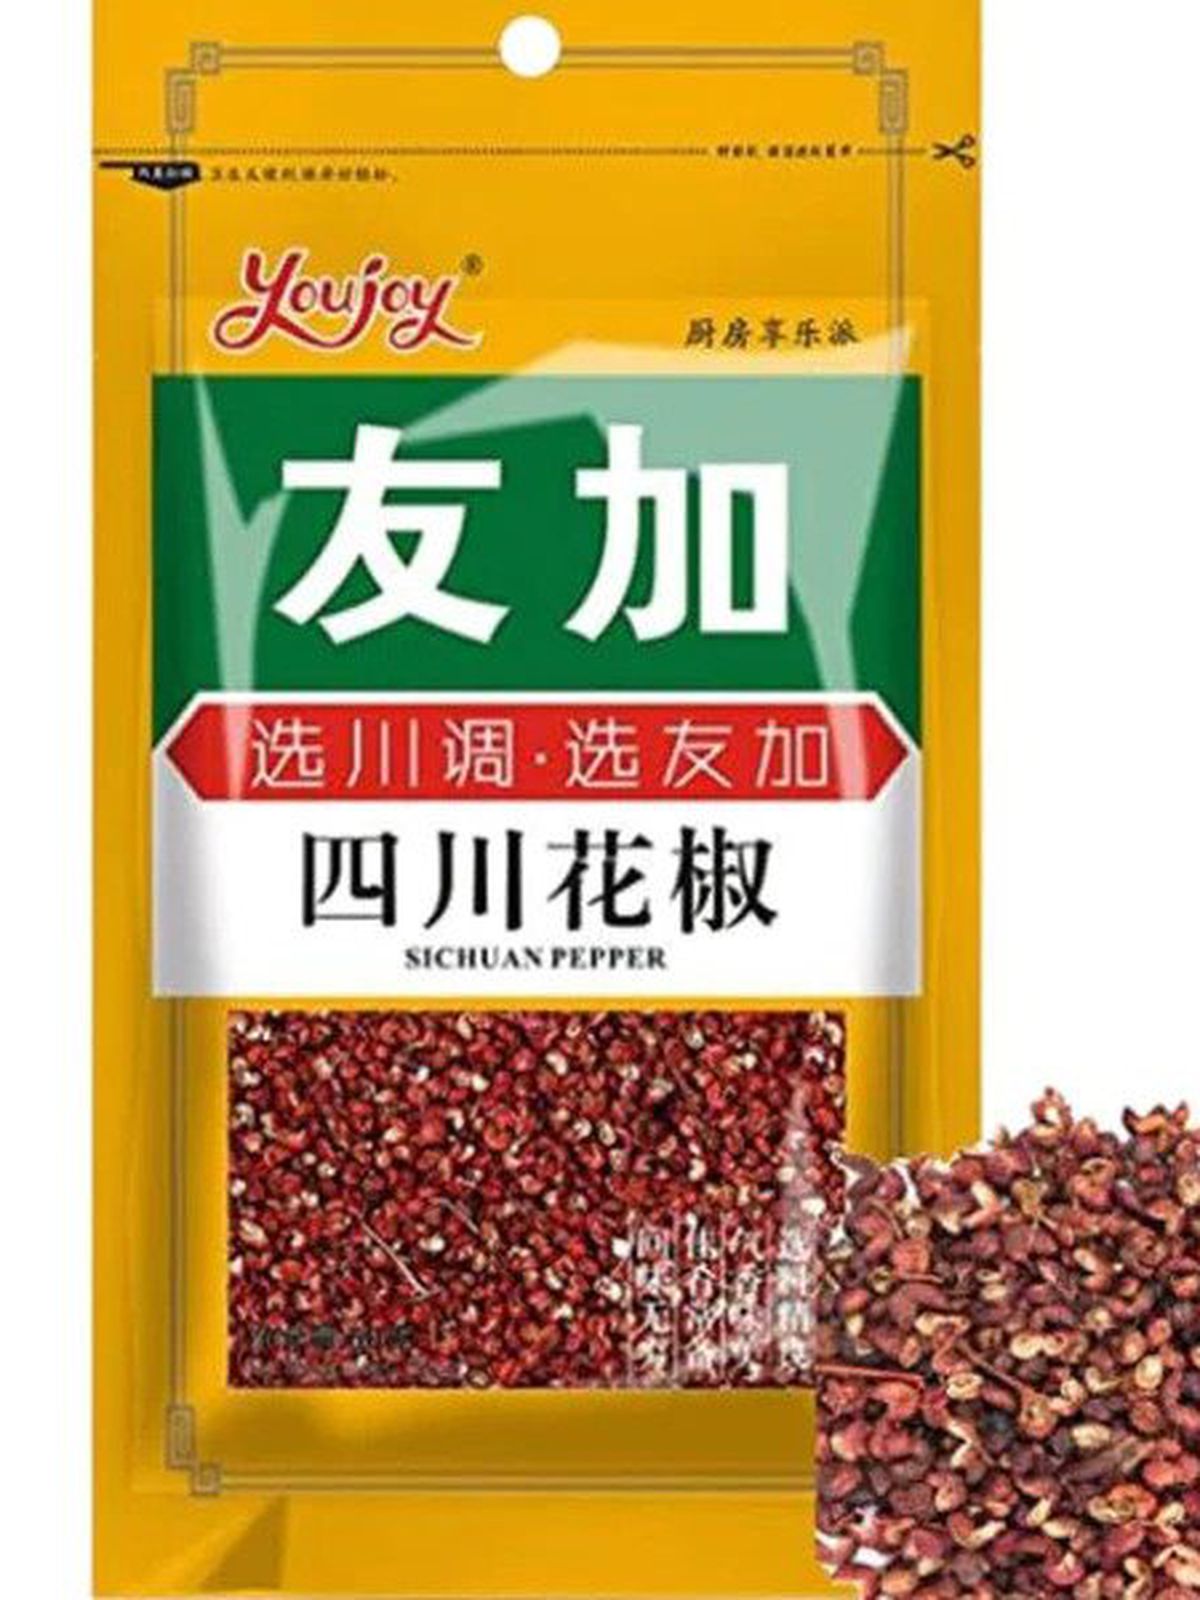 A bag of whole Sichuan peppercorns